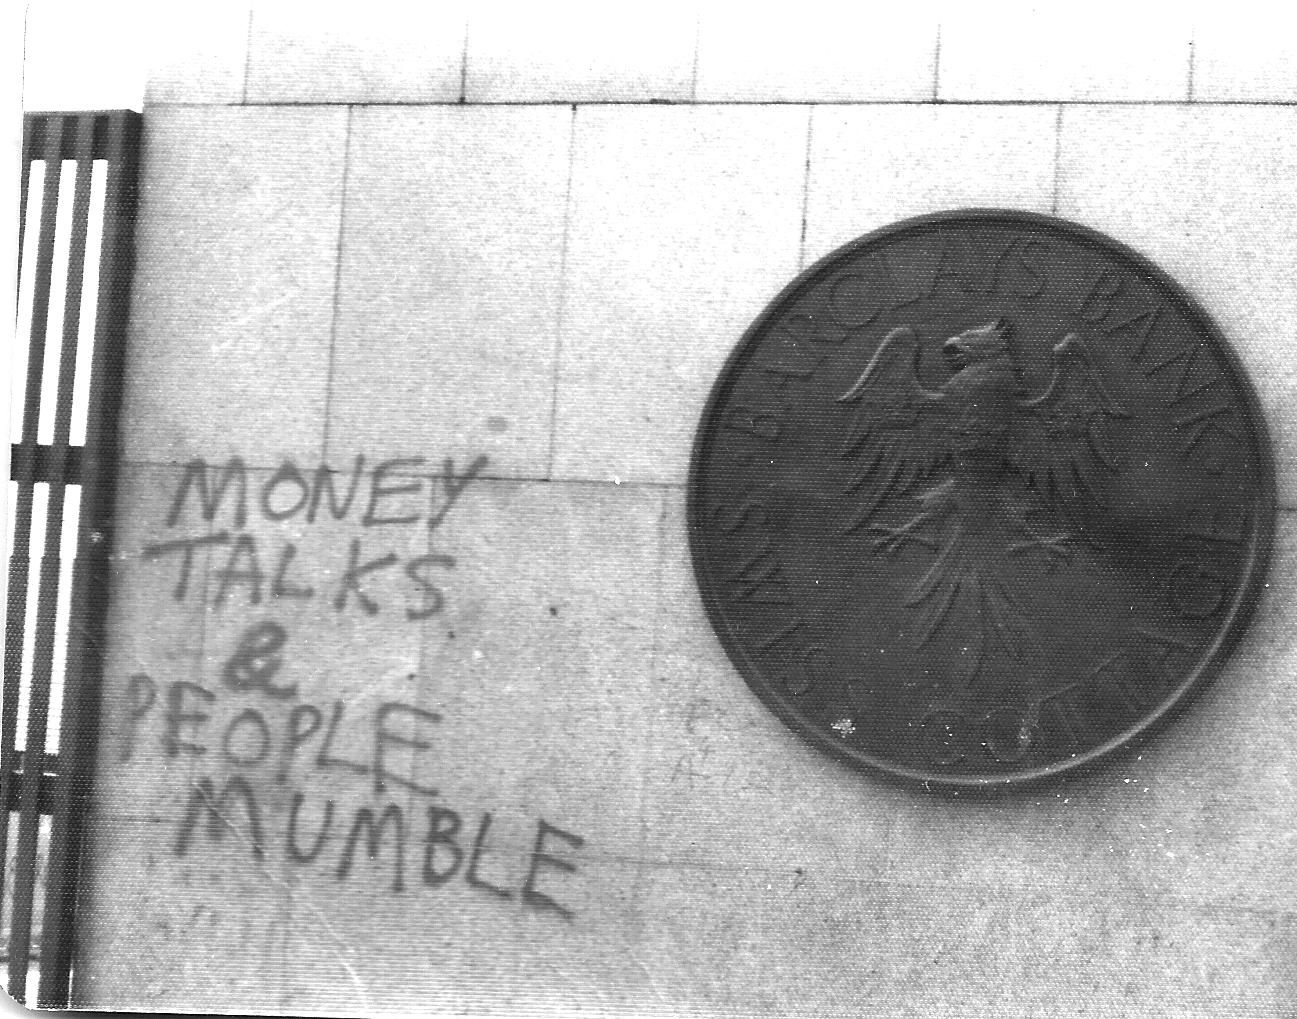 graffiti money talks